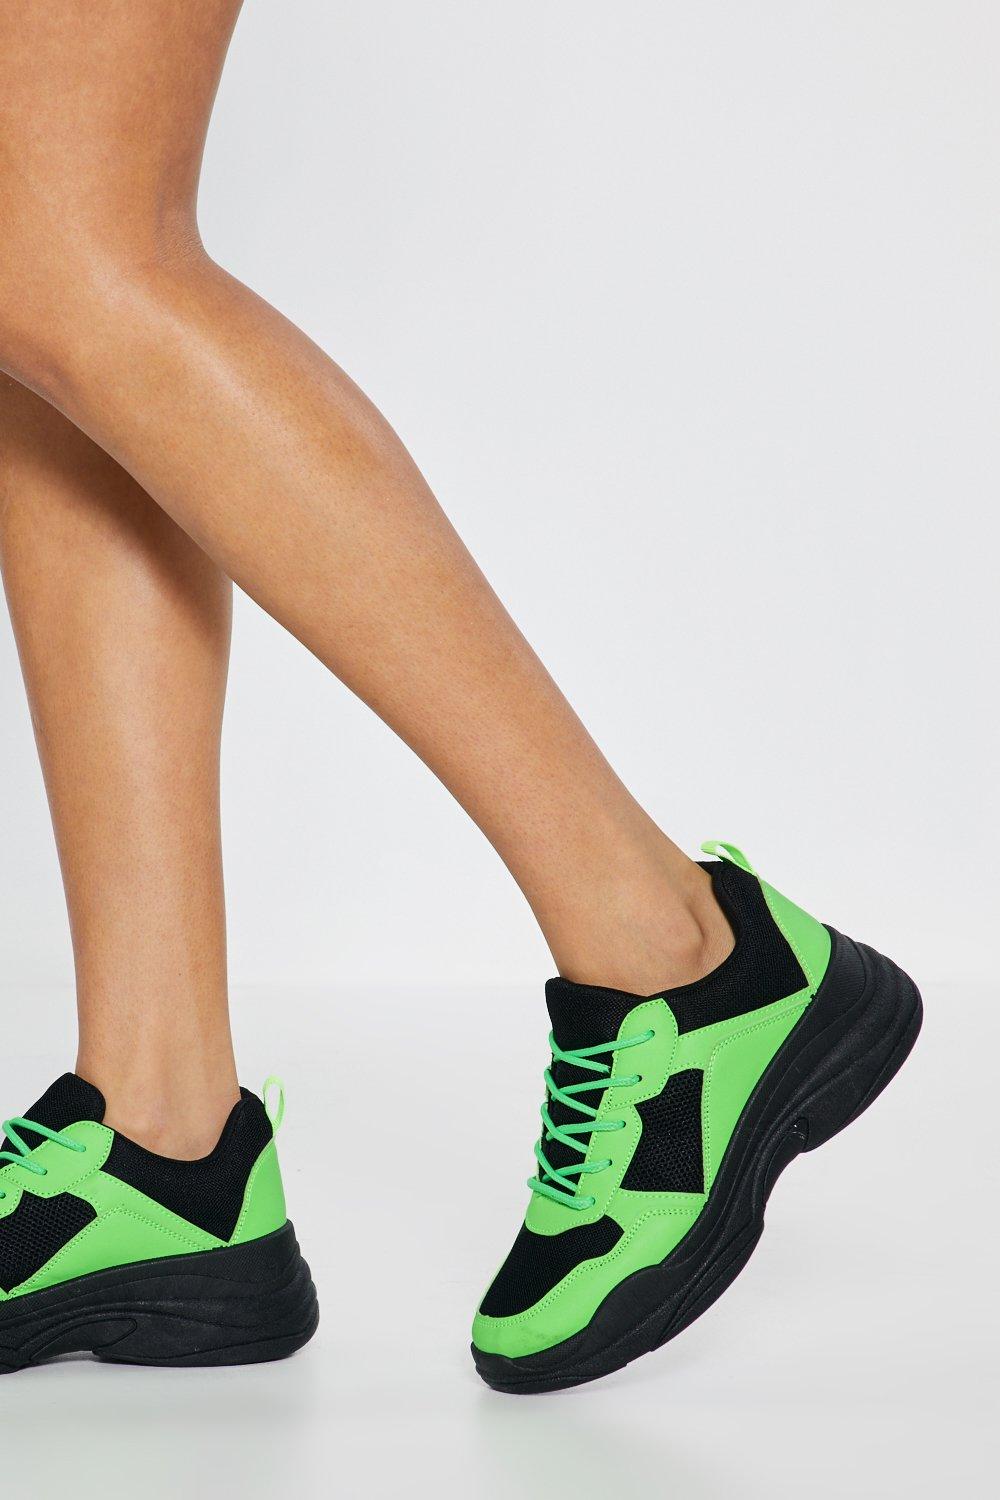 neon green chunky sneakers